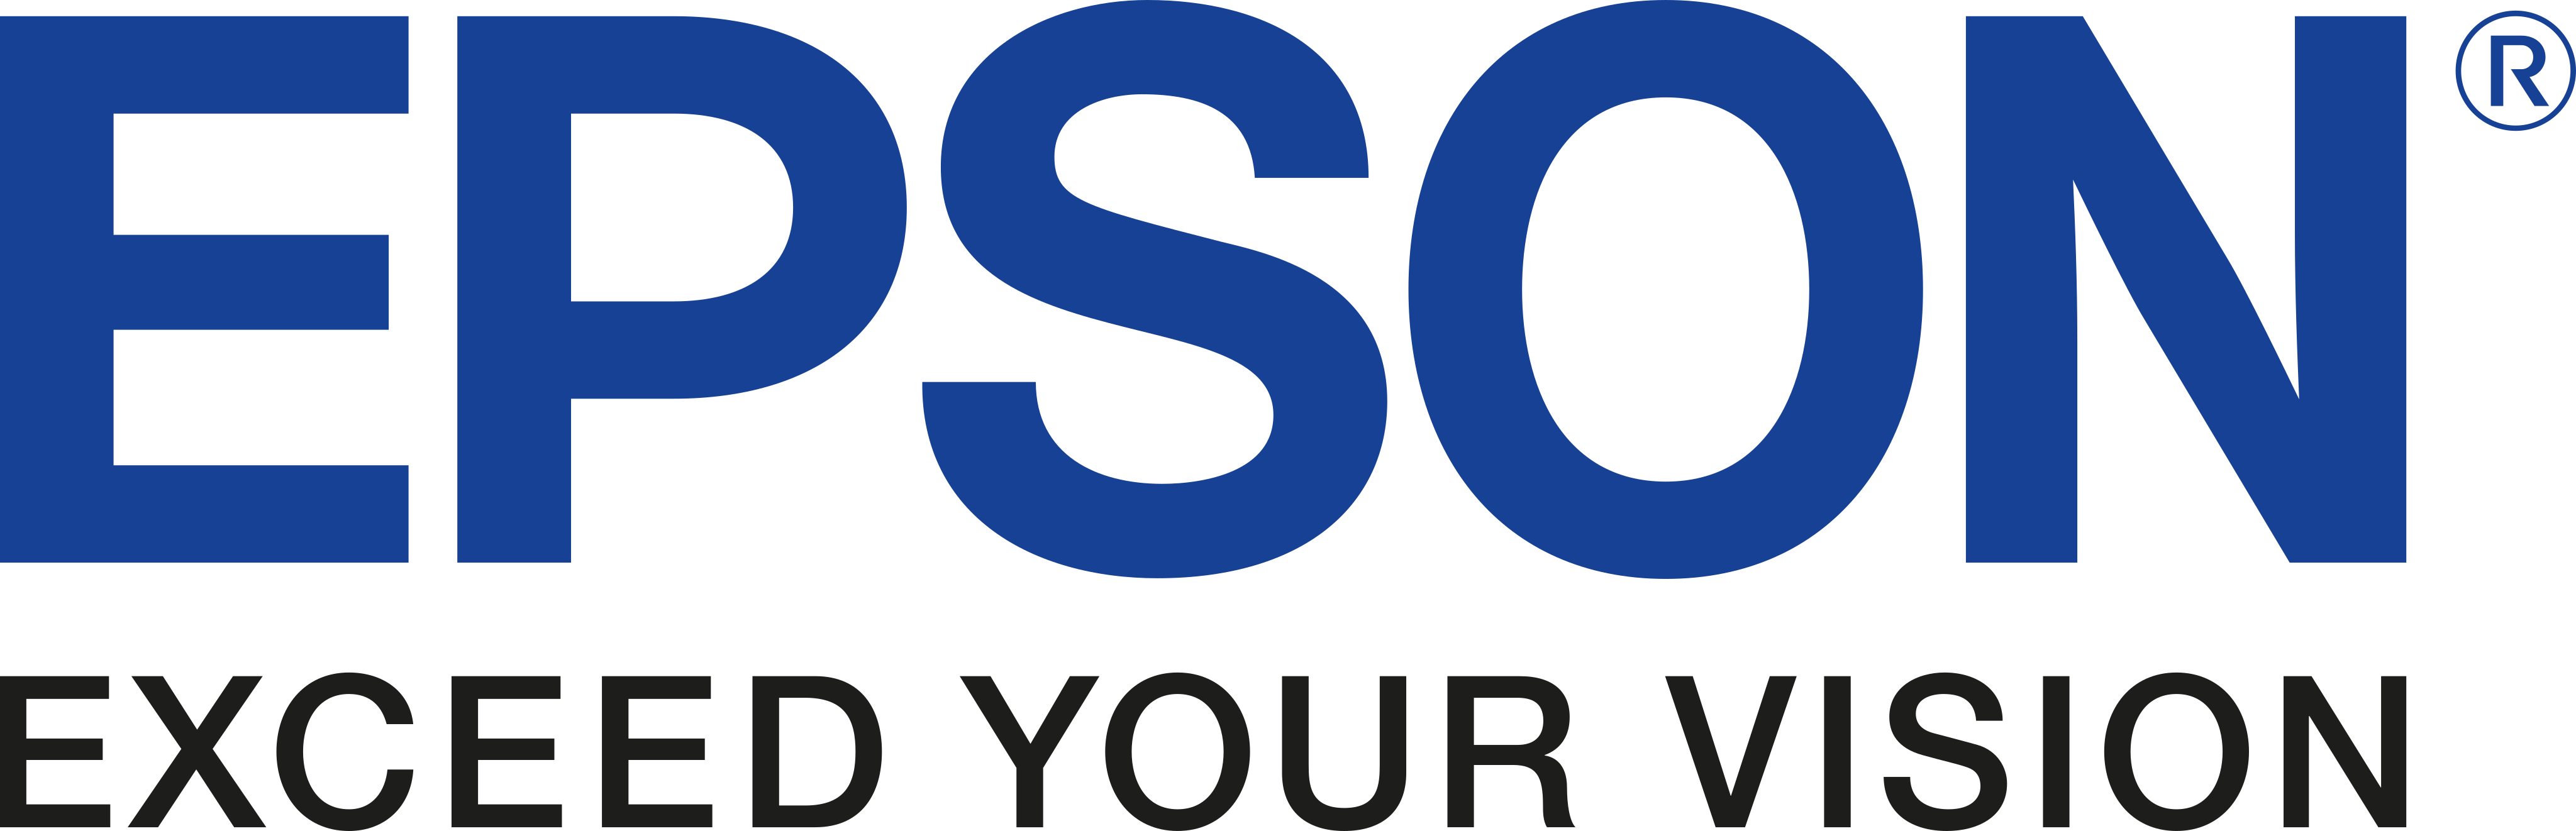 Logo EPSON - Monk Office